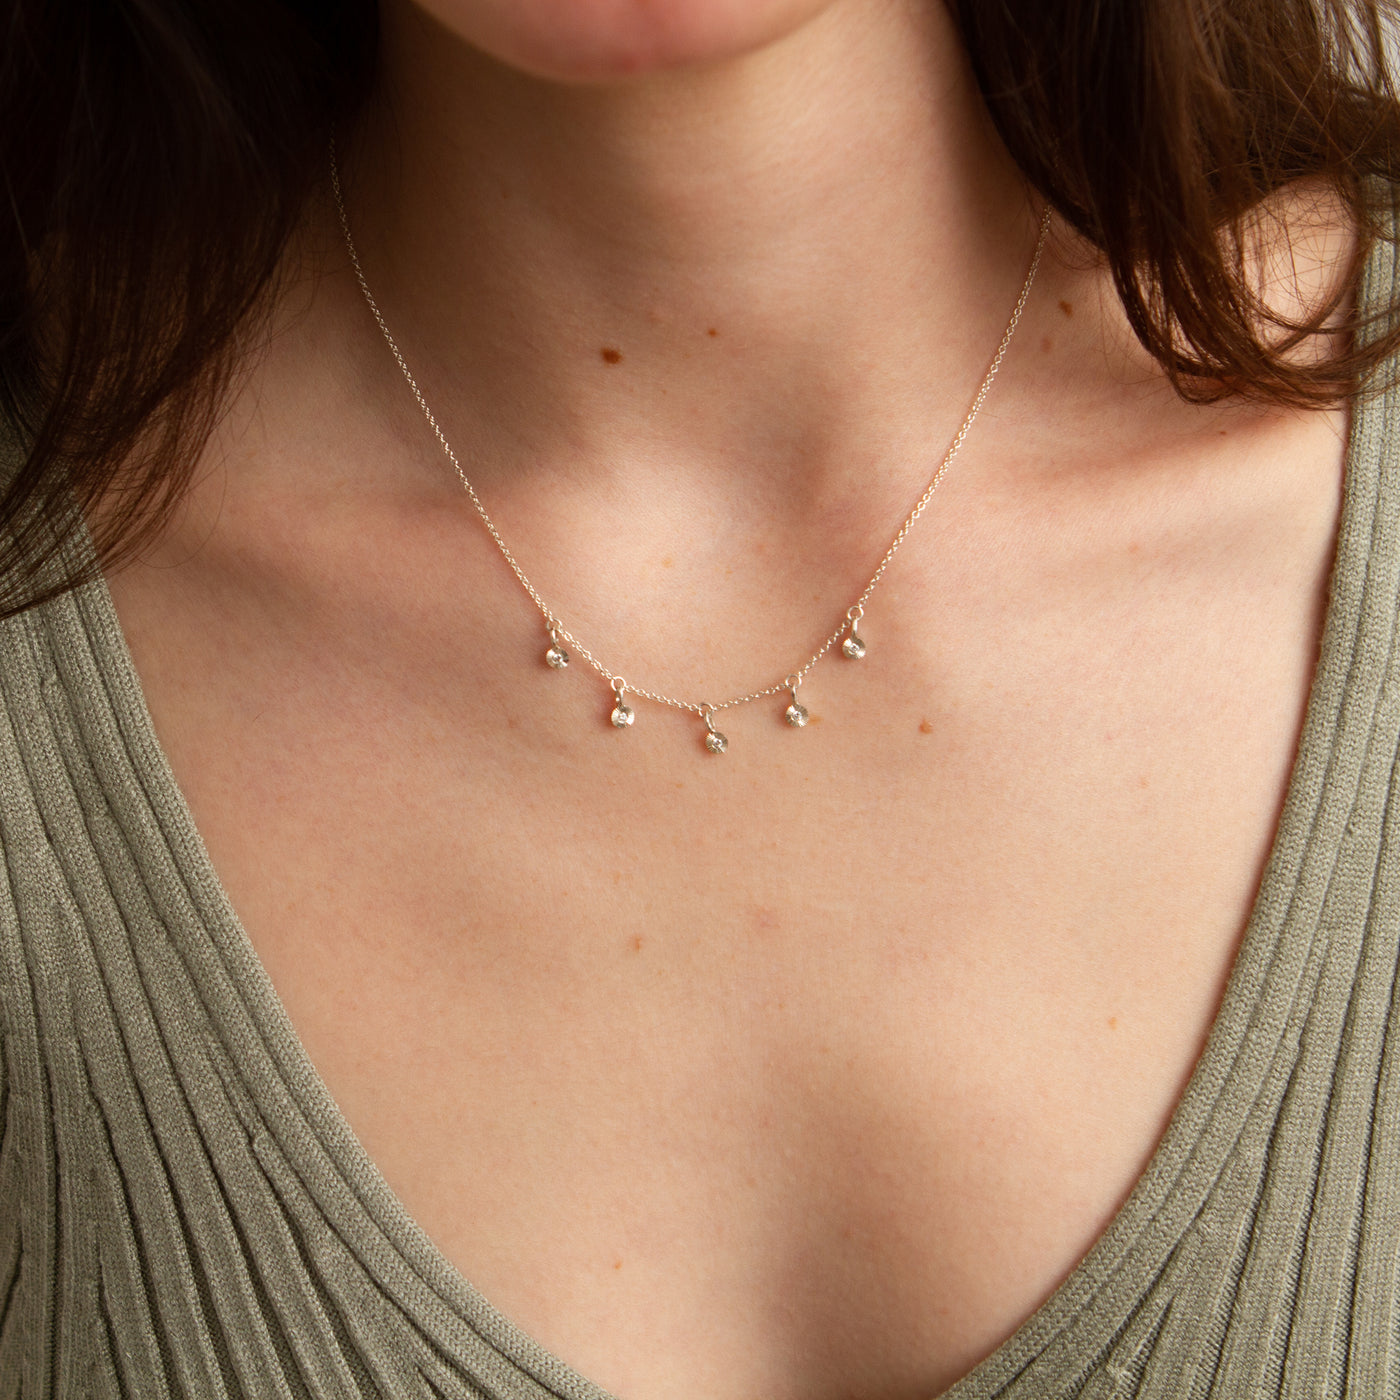 Silver Borealis Necklace modeled on a neck